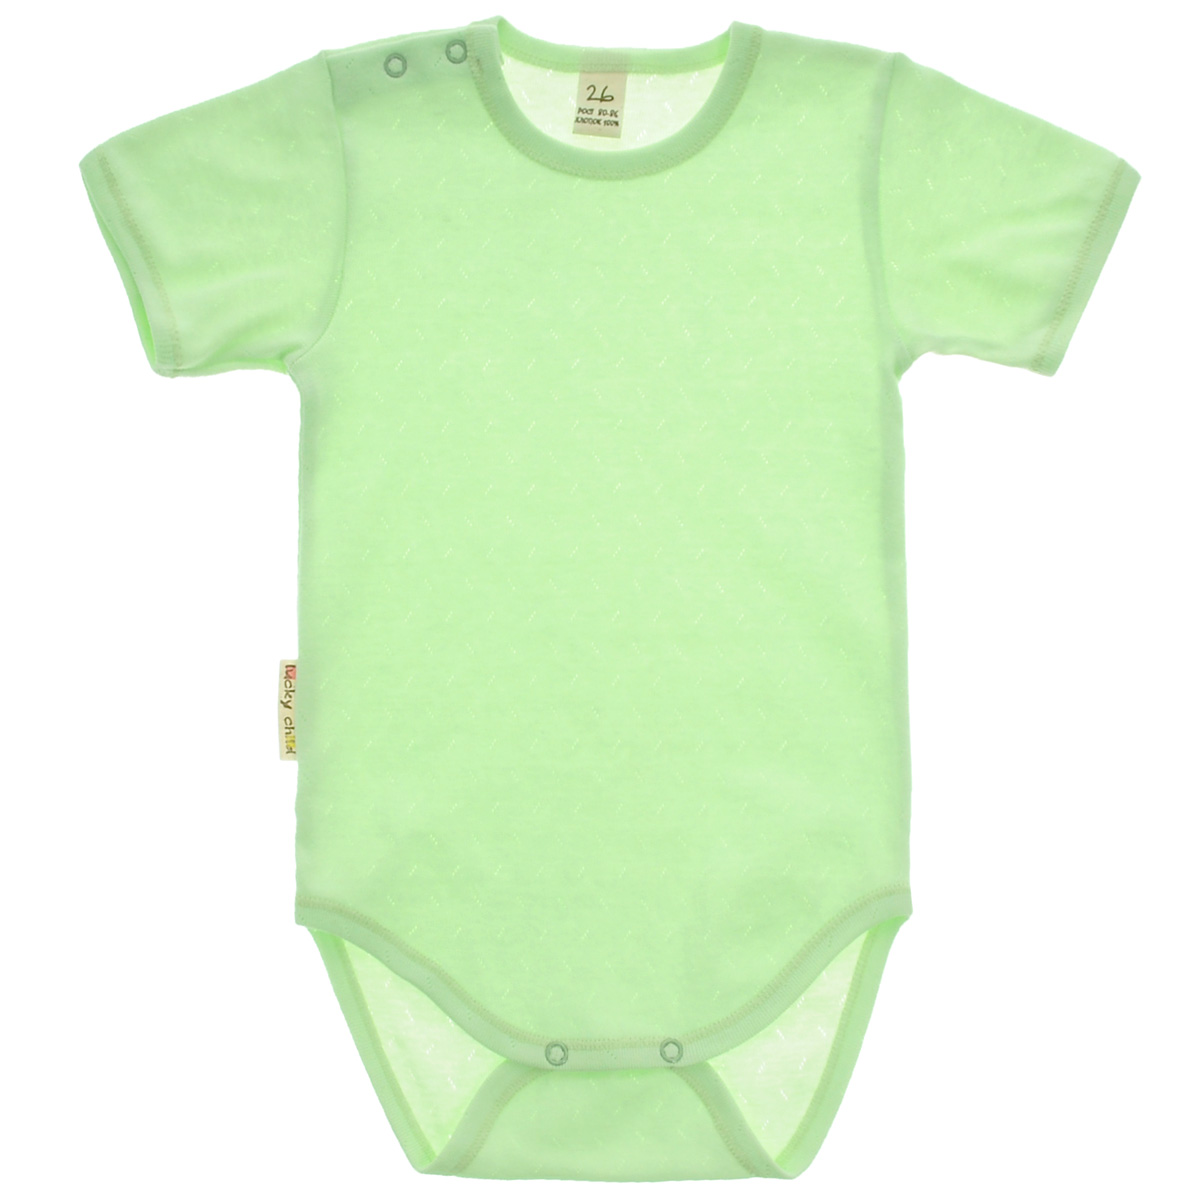 Боди-футболка Lucky Child Ажур, цвет: зеленый. 0-30. Размер 74/80